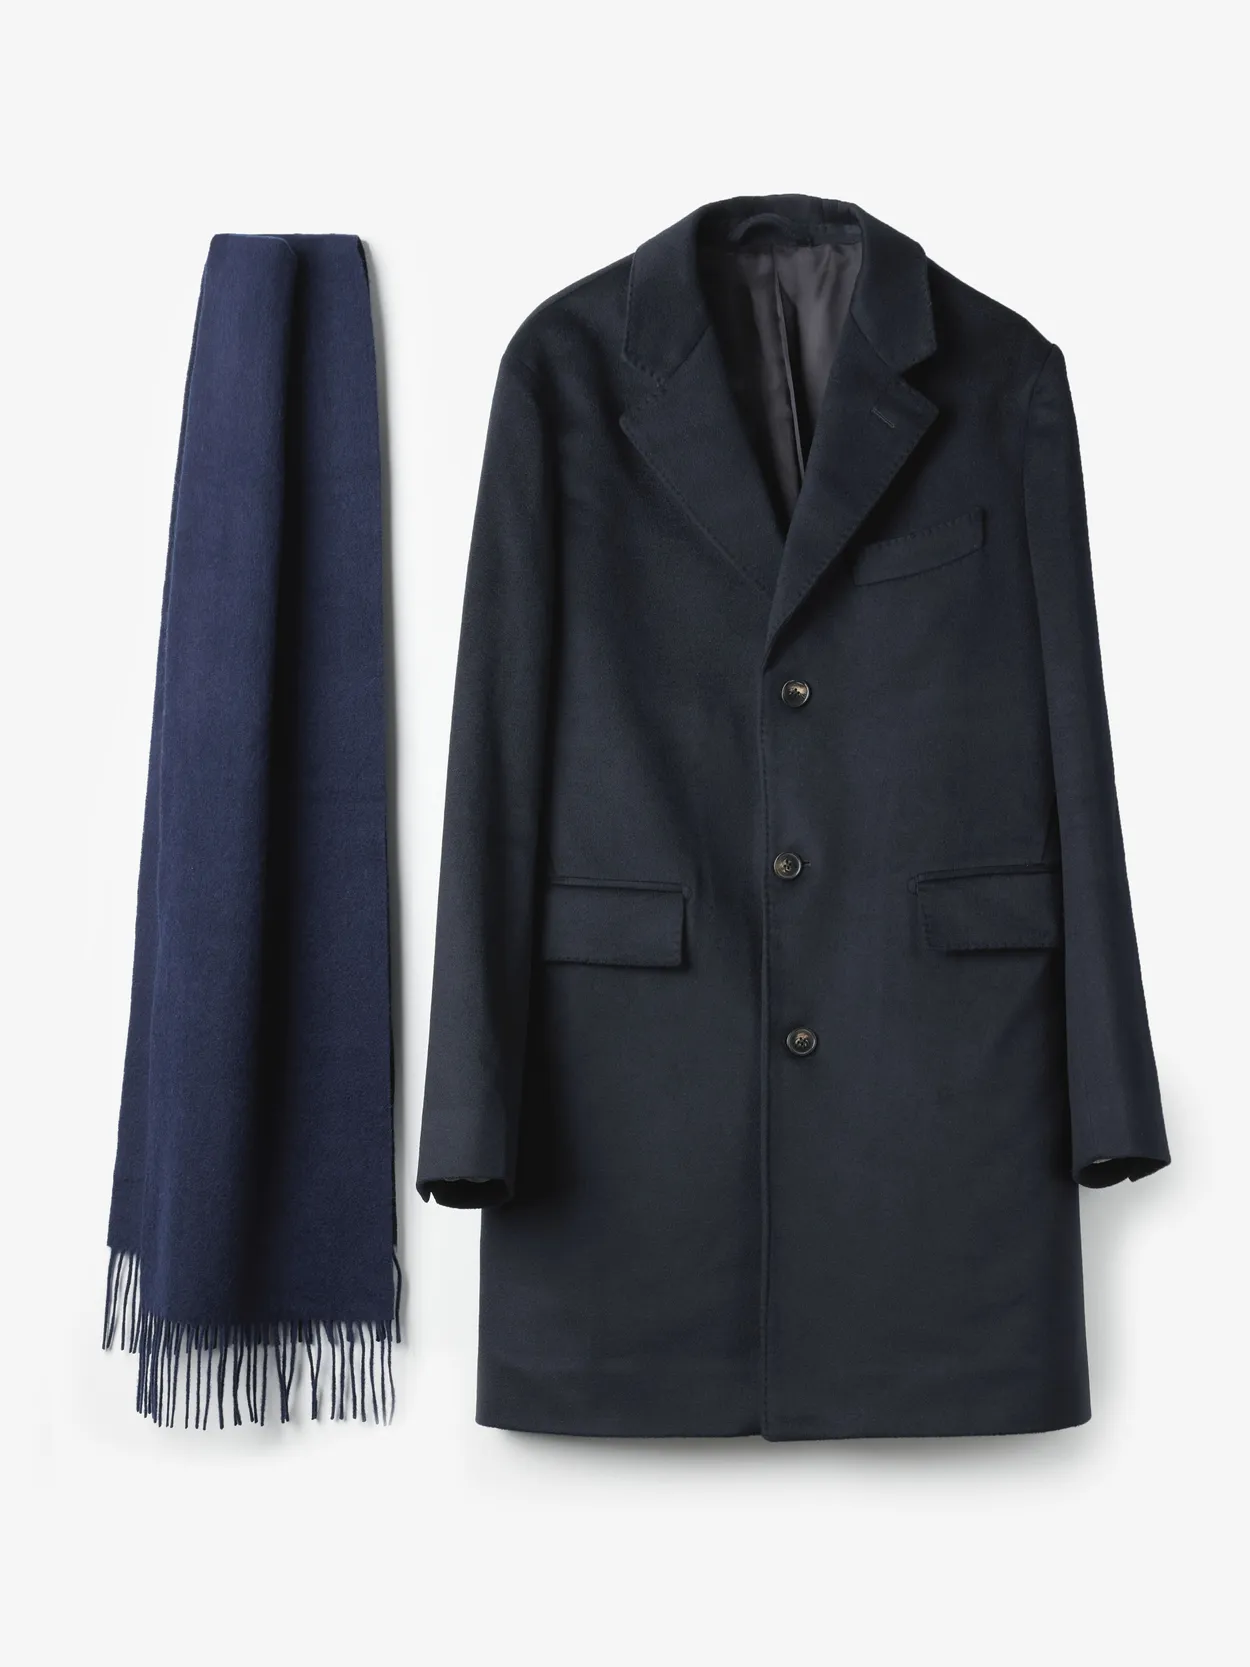 Blue Cashmere Coat & Scarf